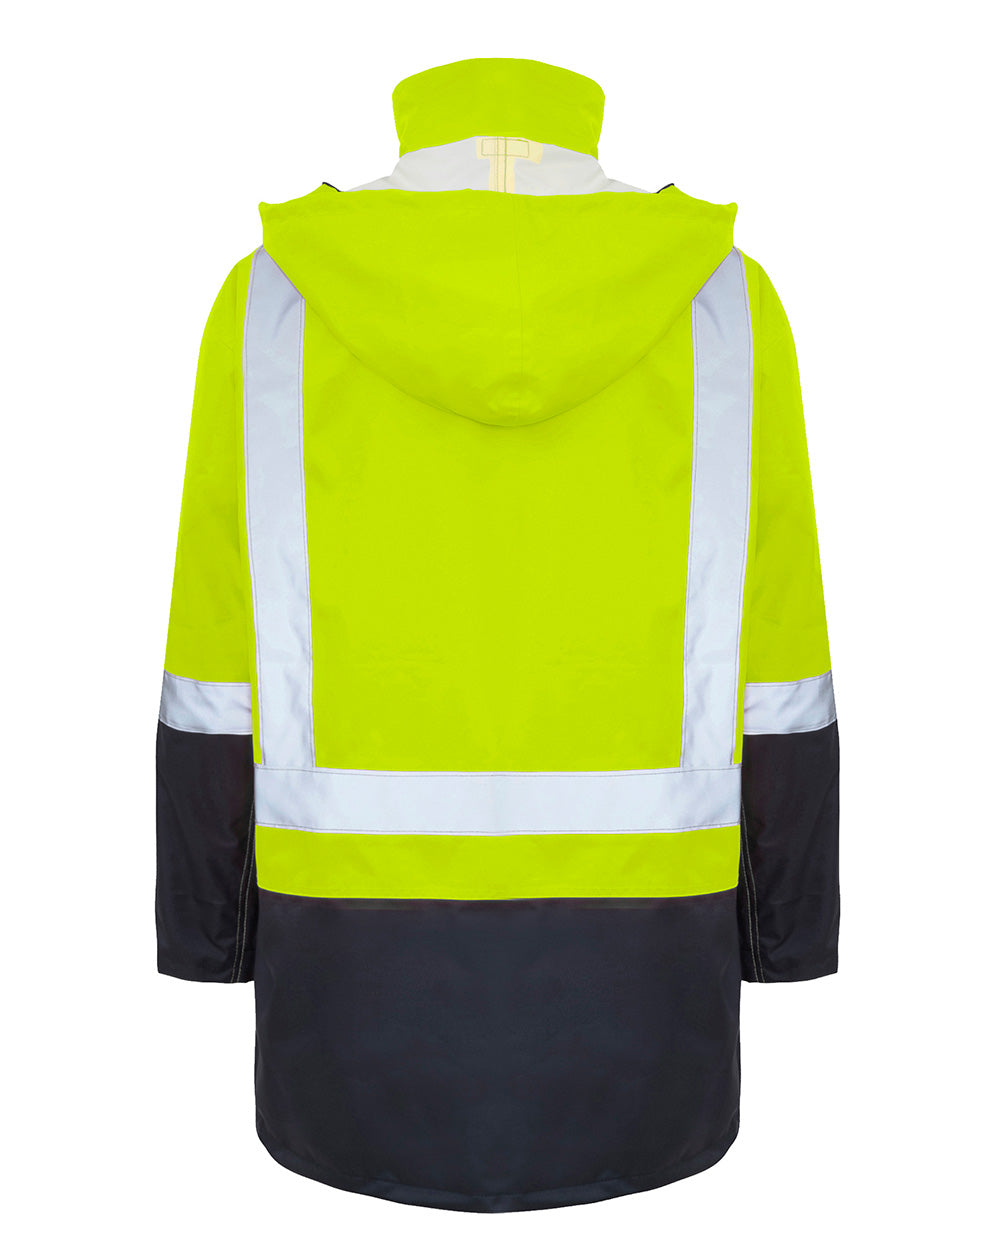 Assist Jacket in Fluoro Yellow & Navy